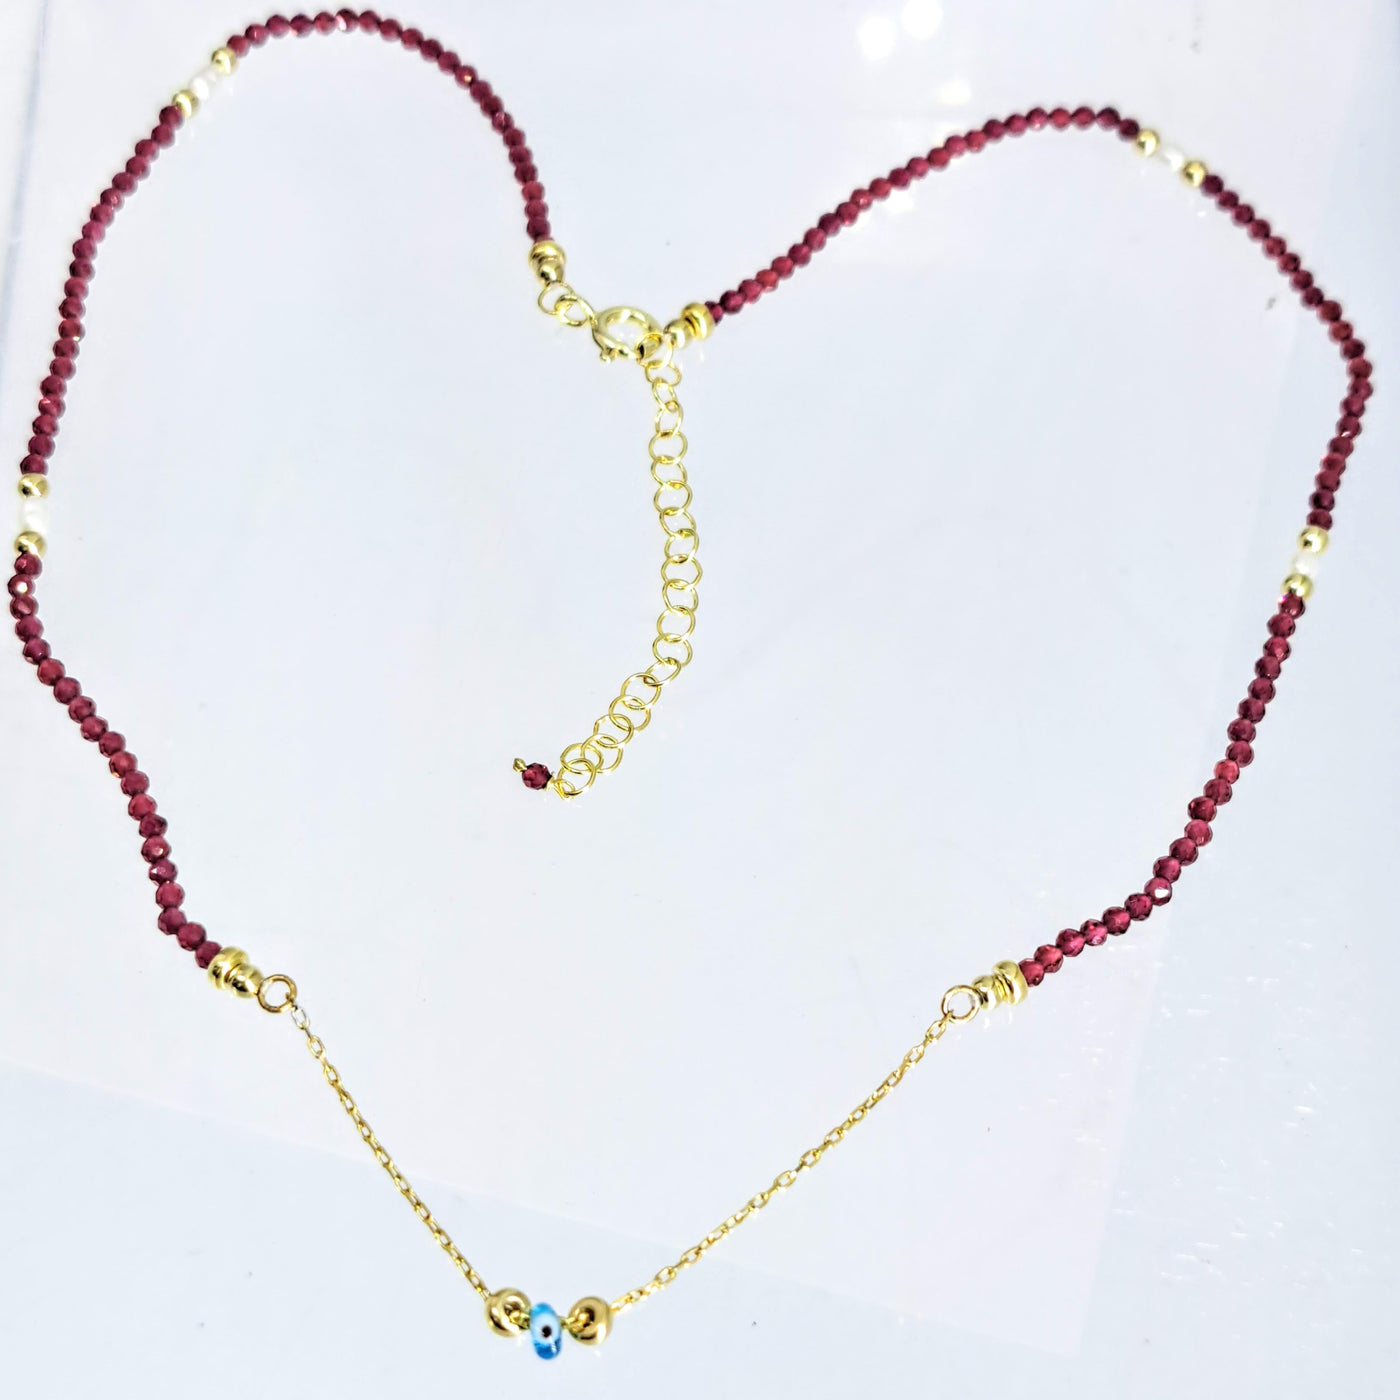 "Sweet Eye" -16"-18" Necklace - Rhodolite Garnet, Pearls, Lamp-worked Glass, 18k Gold Sterling